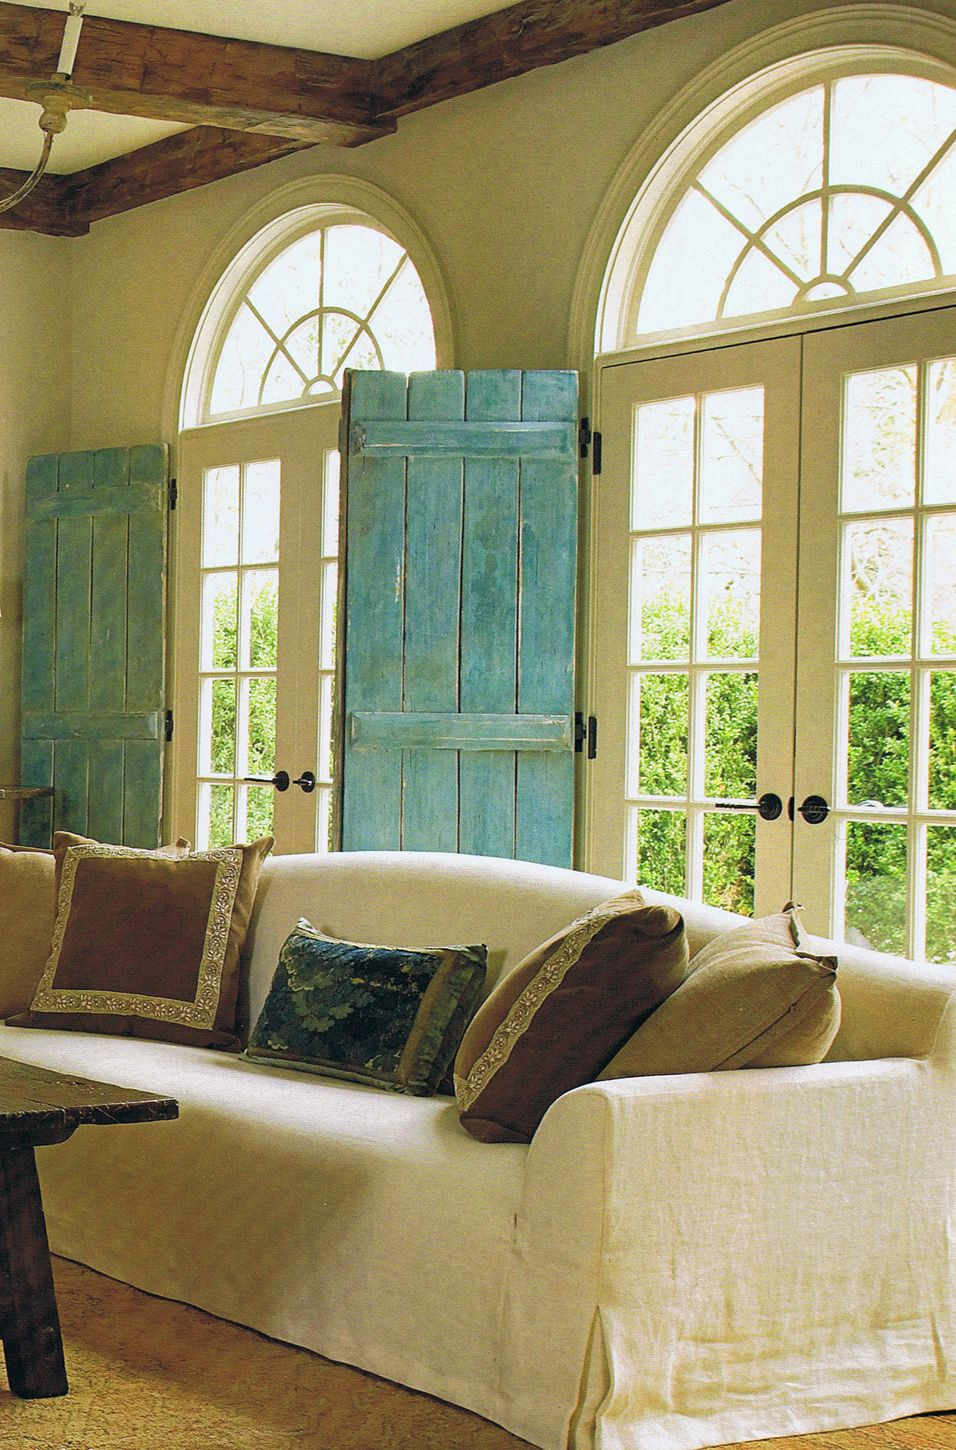 DIY Wooden Shutters Interior
 Best 25 Rustic interior shutters ideas on Pinterest